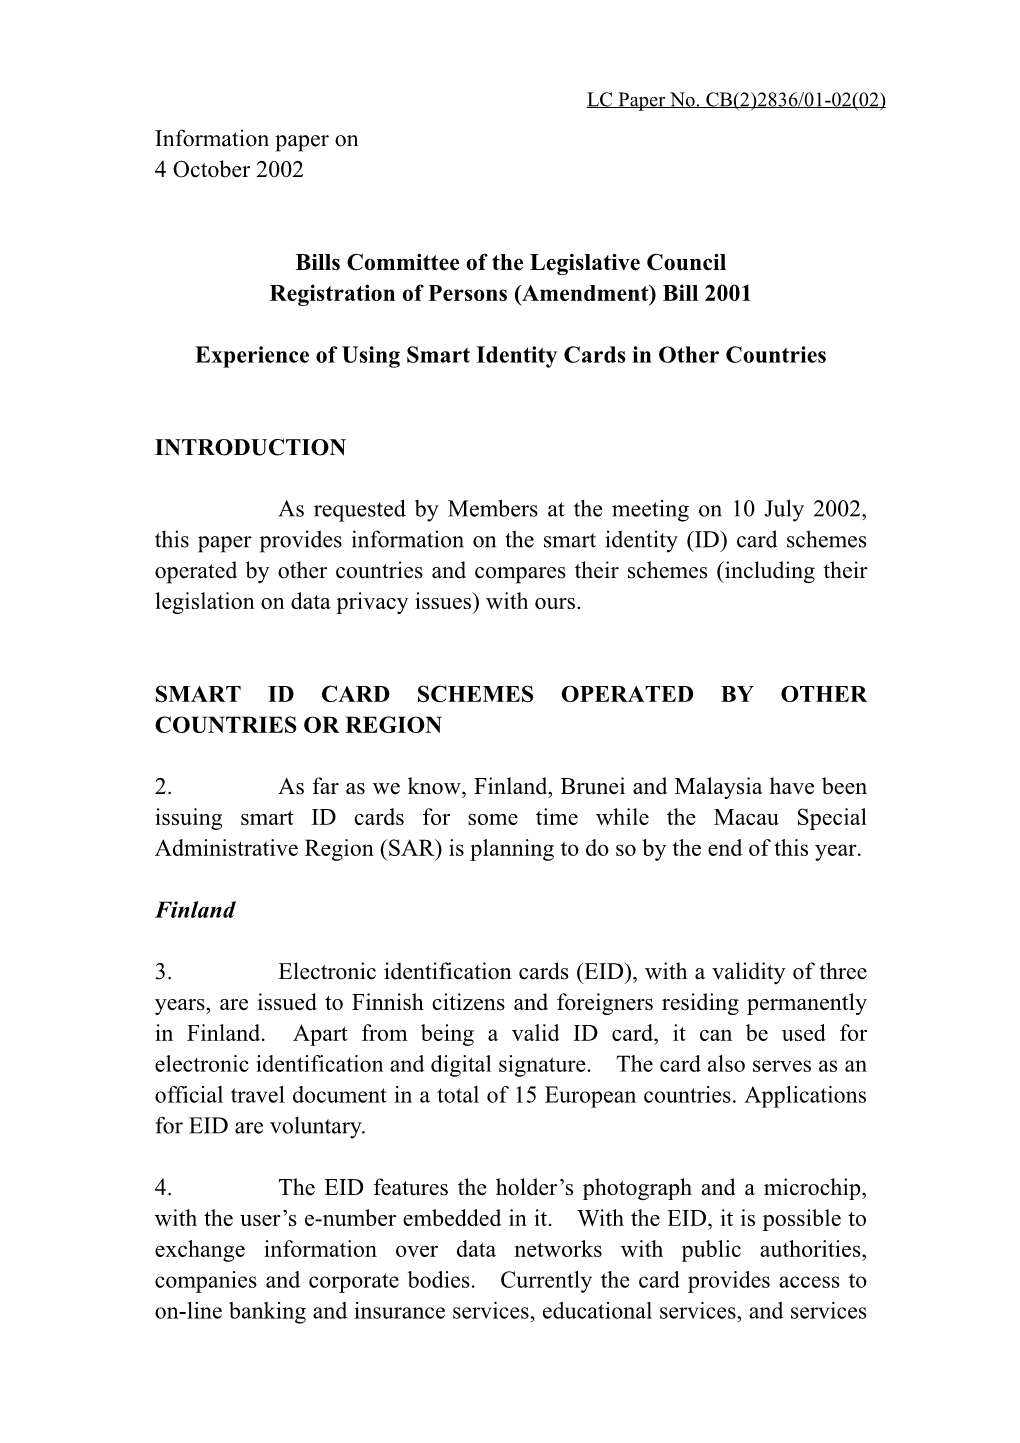 CB(2)2836/01-02(02) Information Paper on 4 October 2002